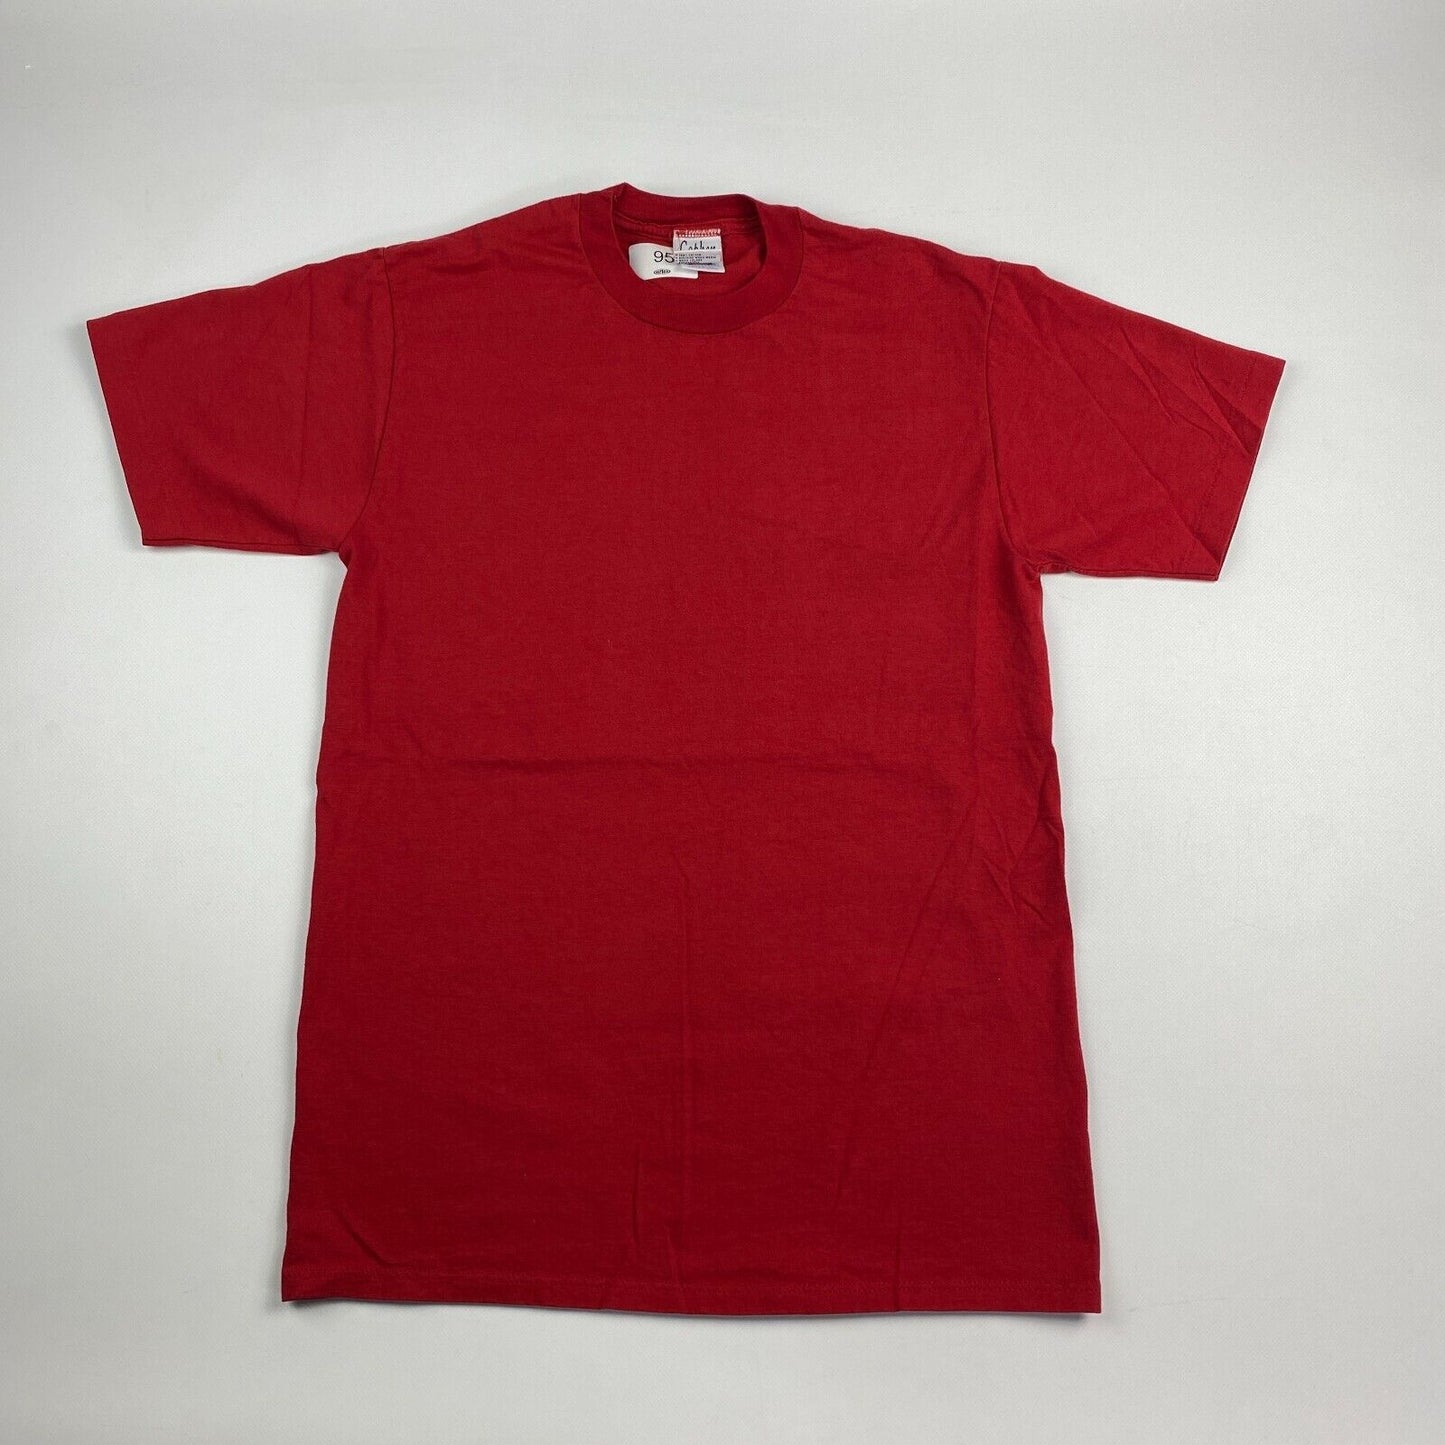 VINTAGE 90s Blank Red T-Shirt Single Stitch sz M Mens MadeinUSA